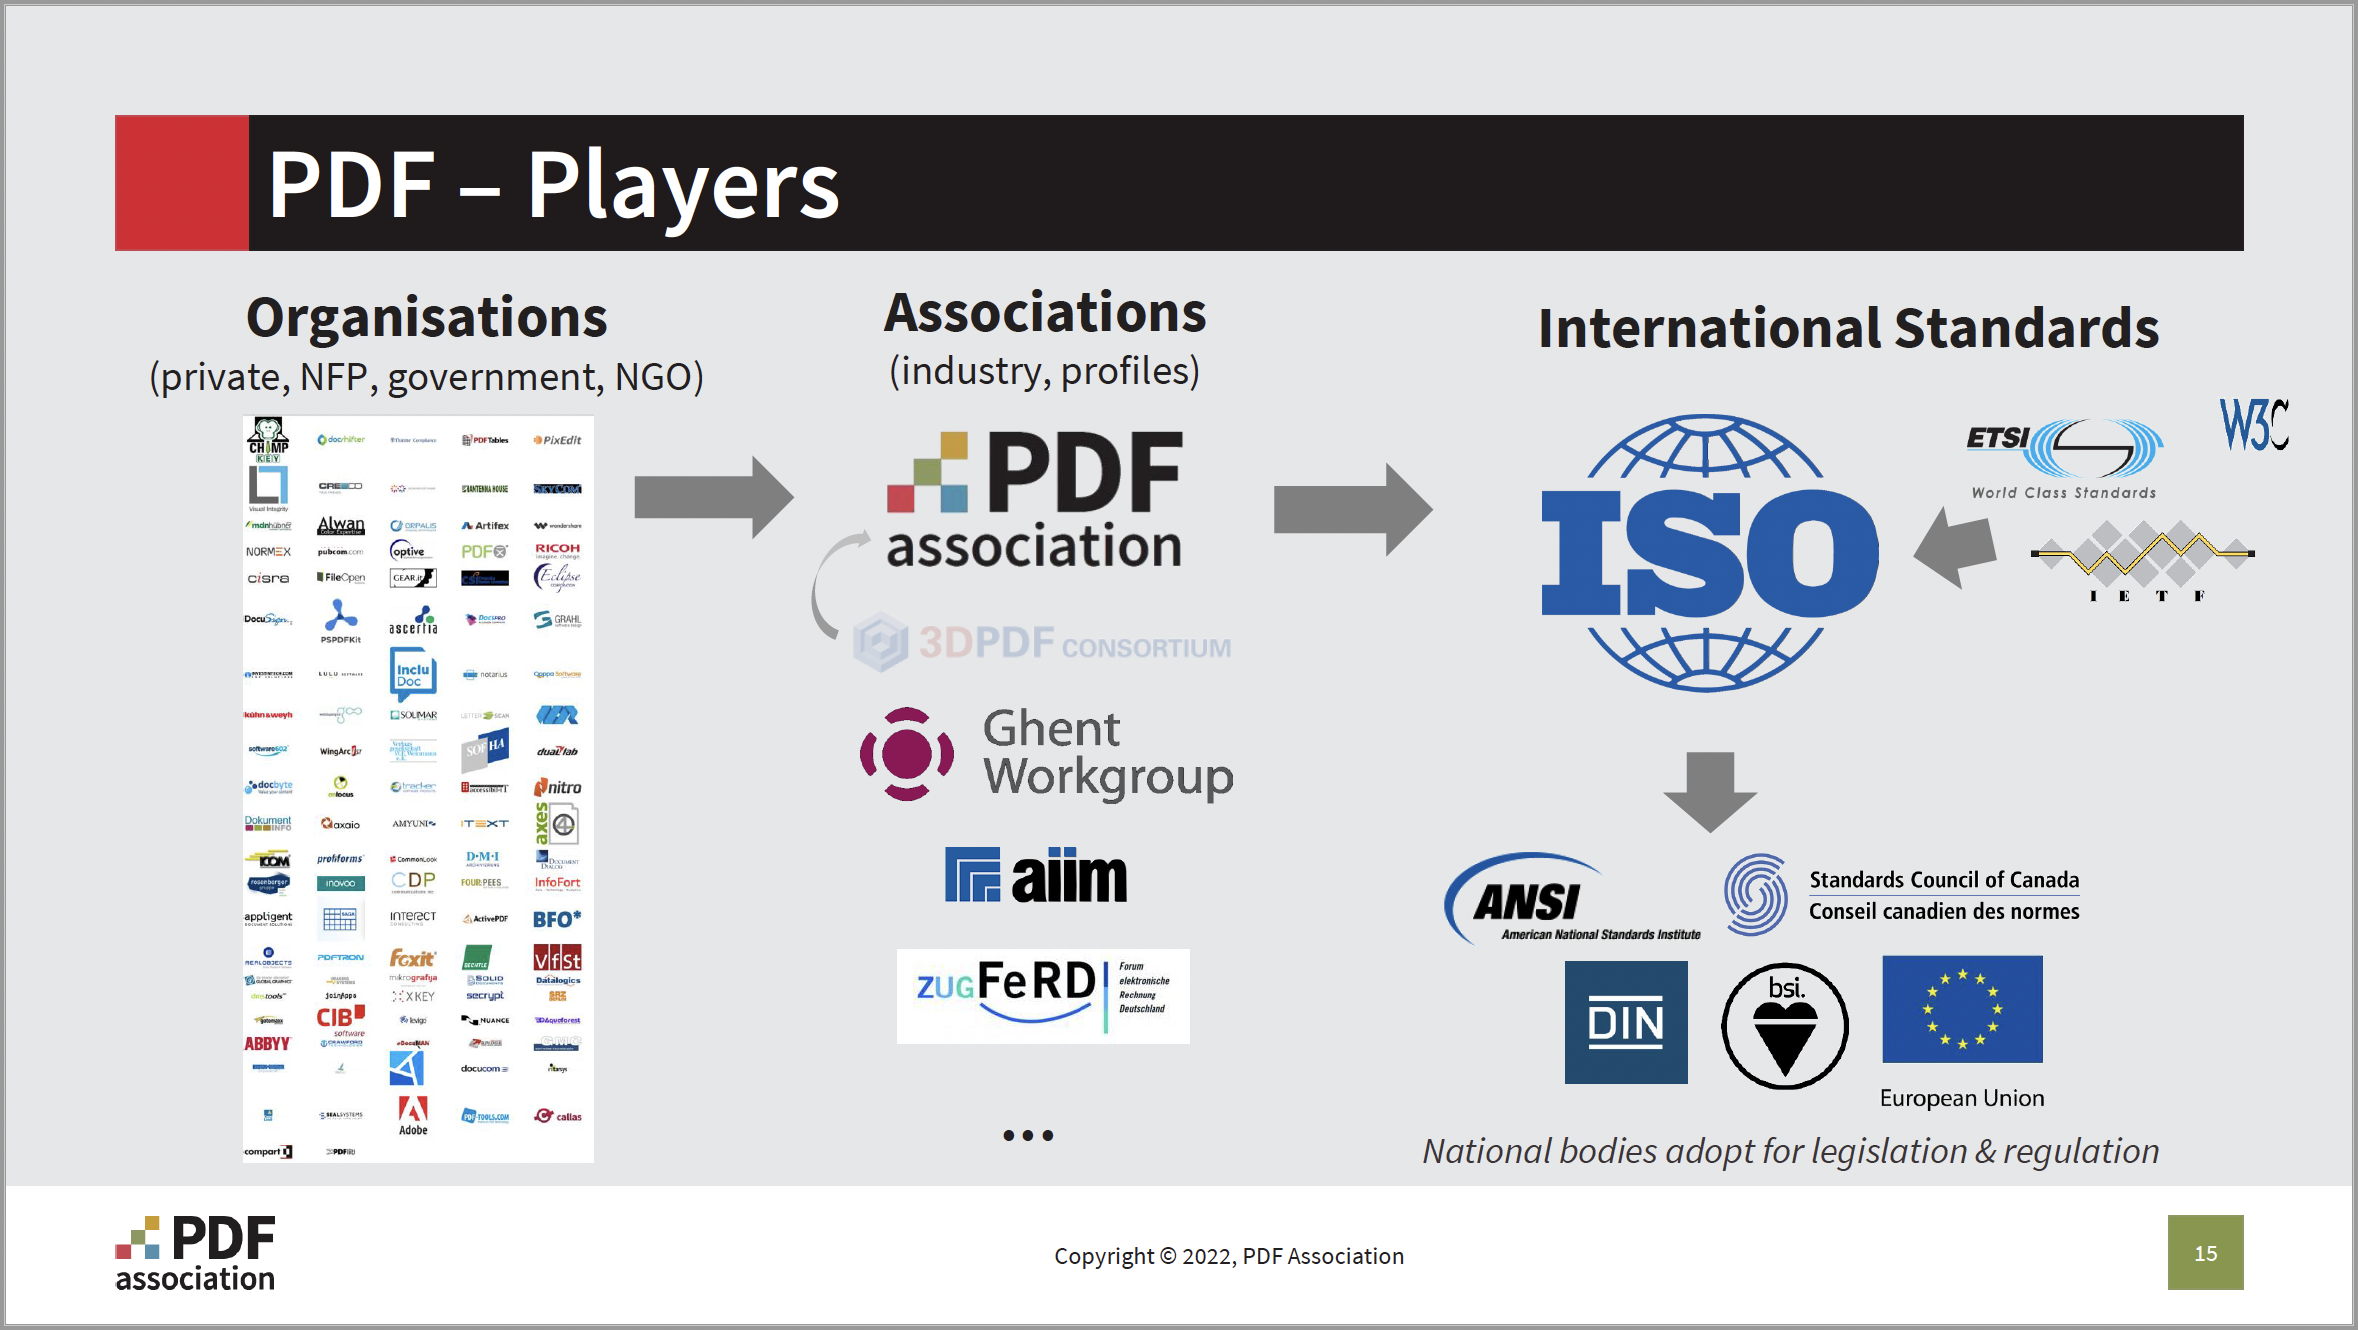 Source: PDF Association, The PDF Community: PDF Players - Picture